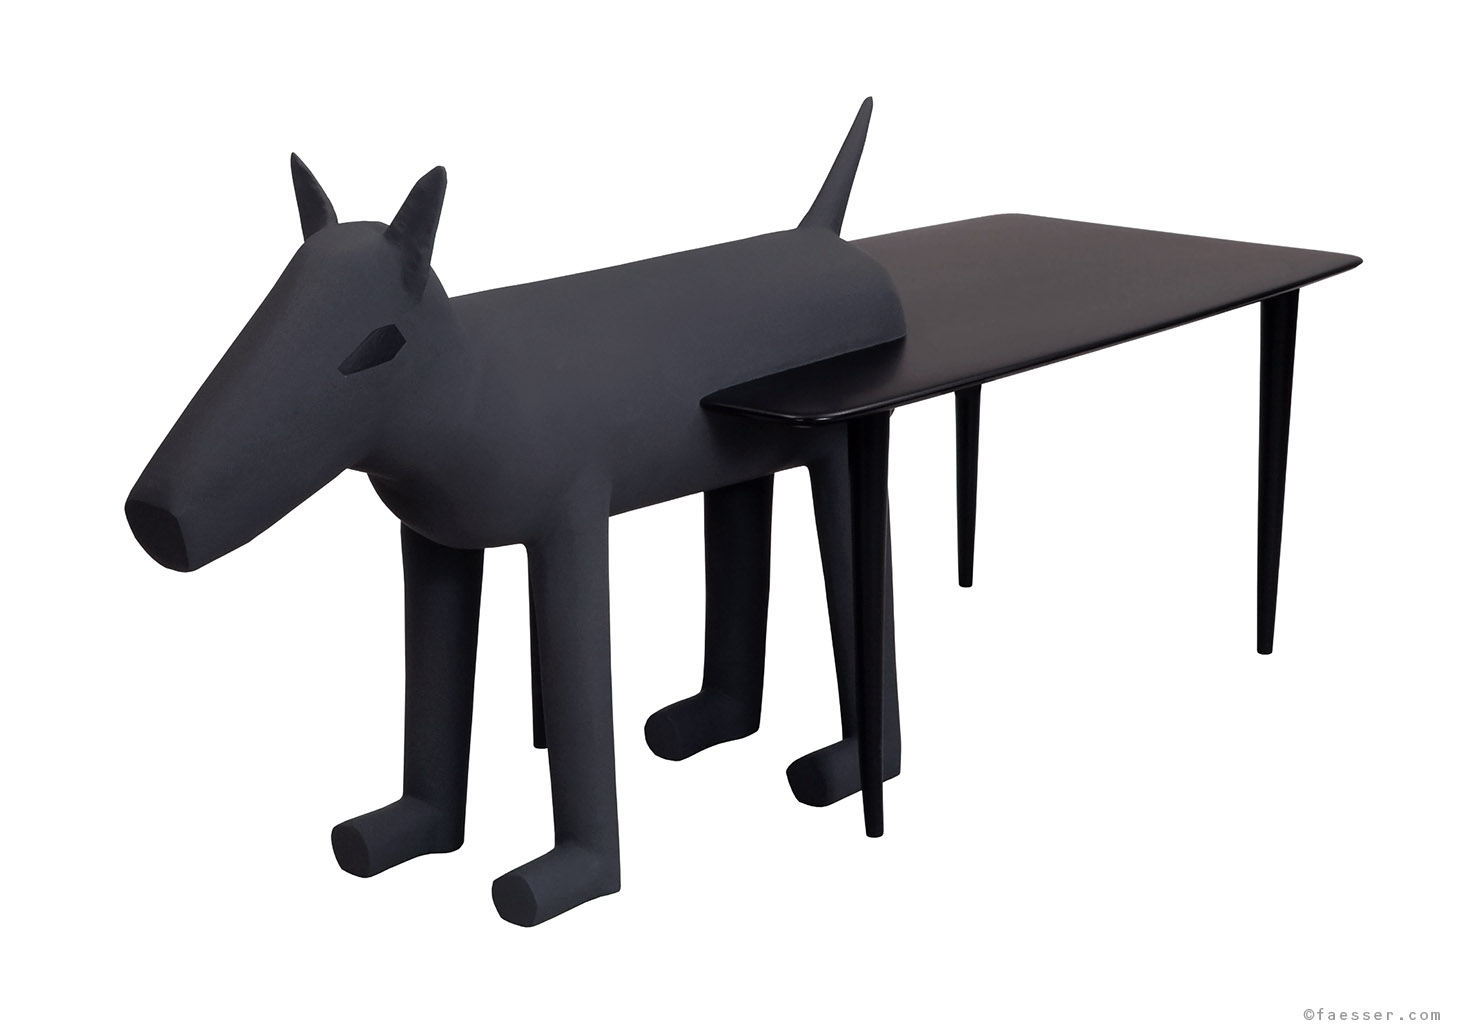 Table-Runner as functional animal furniture sculpture; work of art; artist Roland Faesser, sculptor 1987